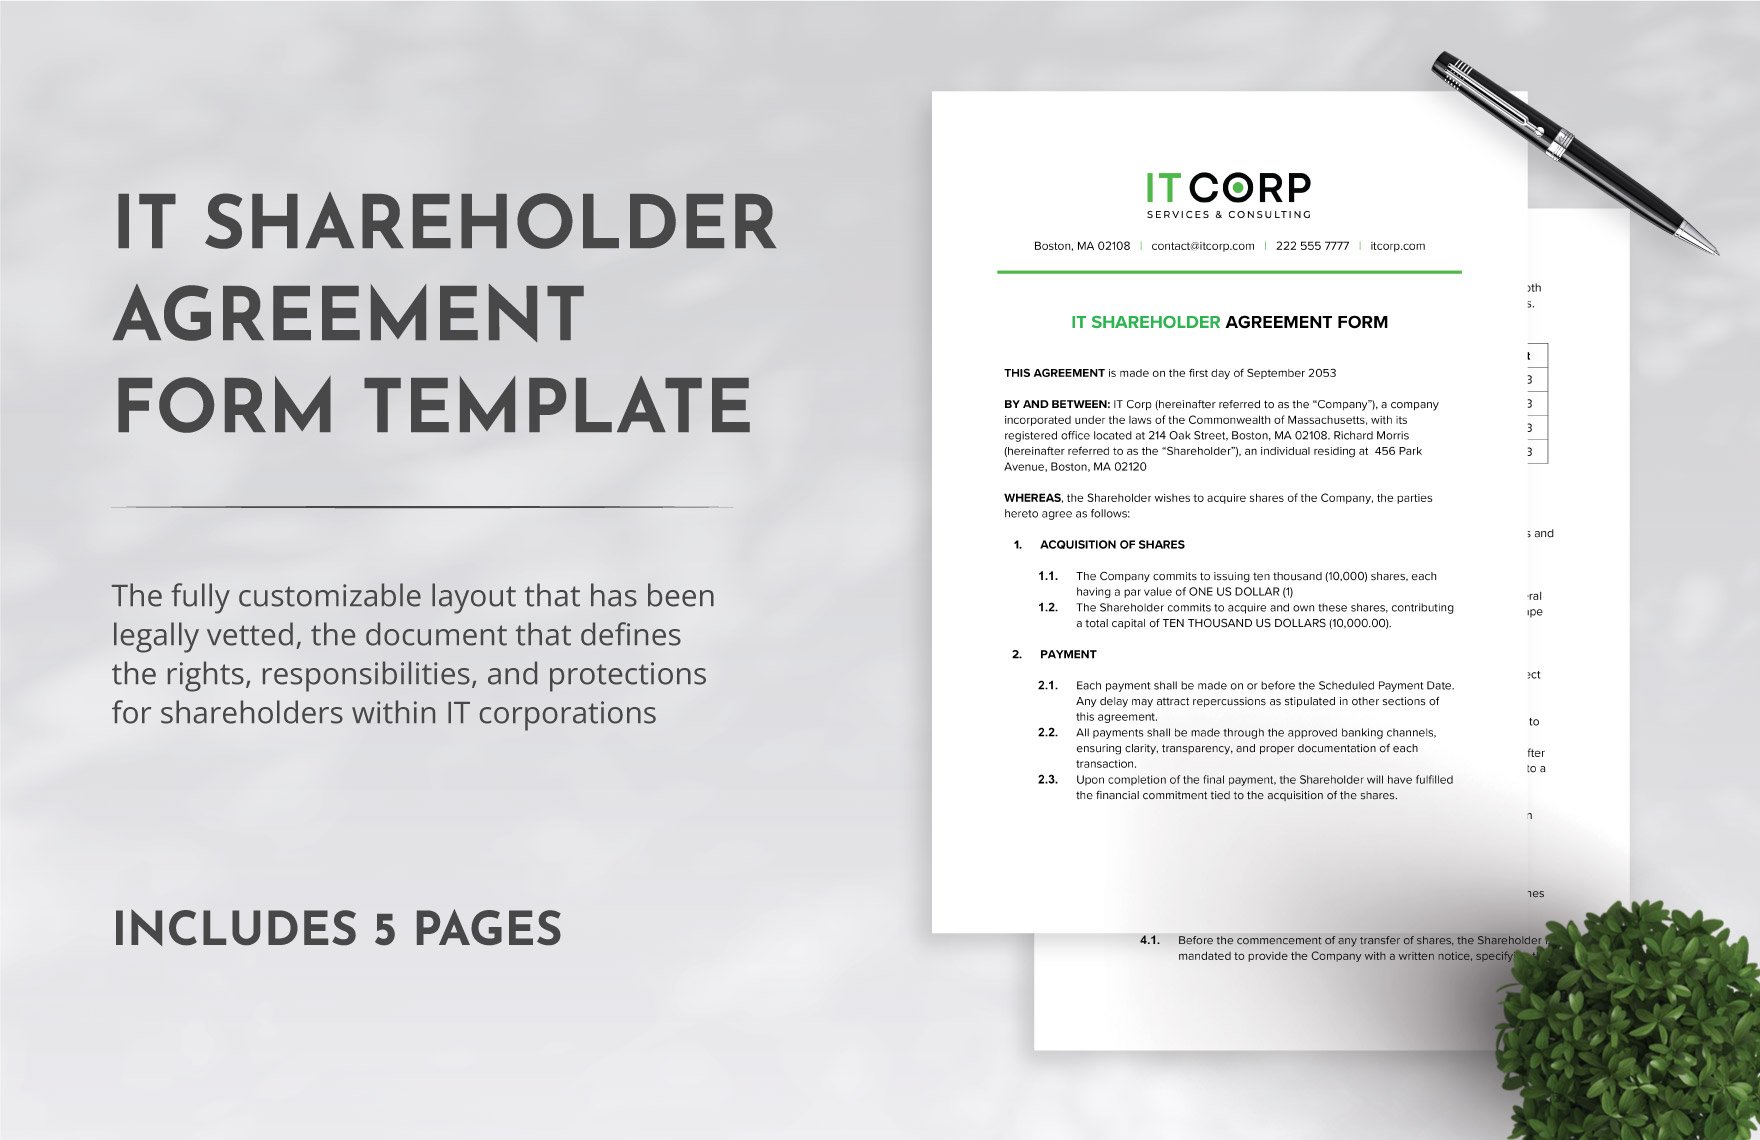 IT Shareholder Agreement Form Template